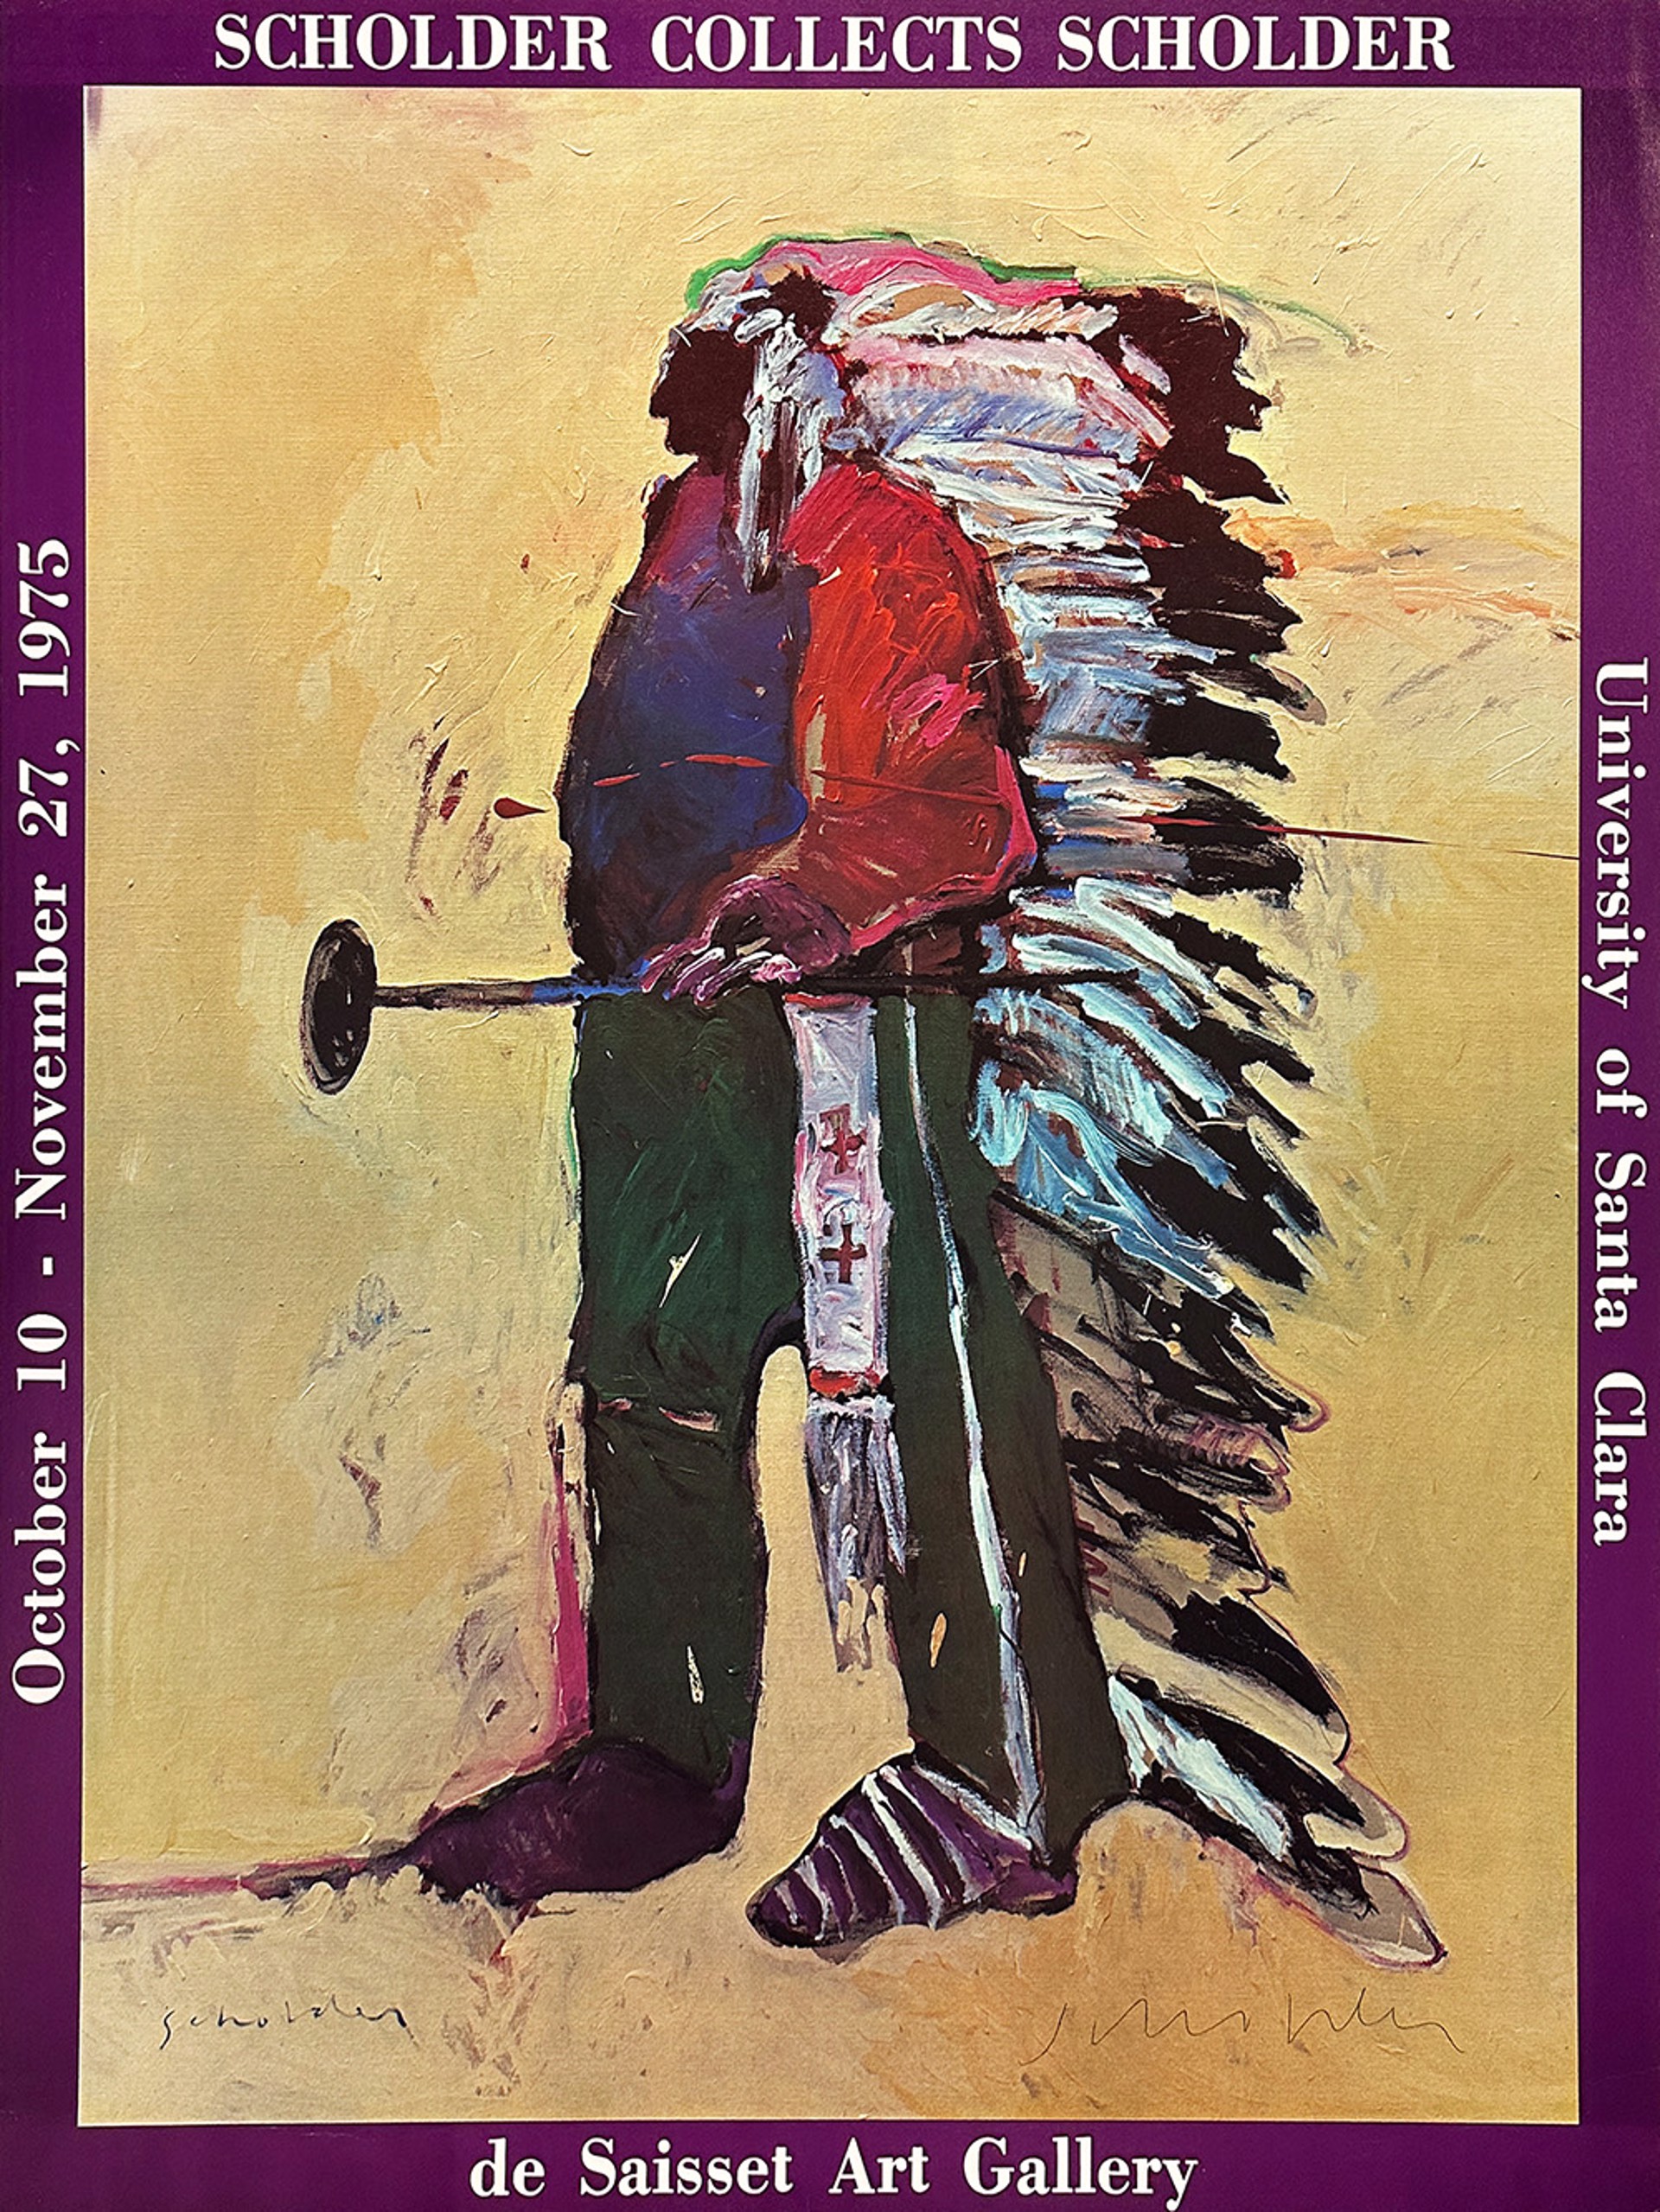 De Saisset Art Gallery - Indian Chief Image by Fritz Scholder